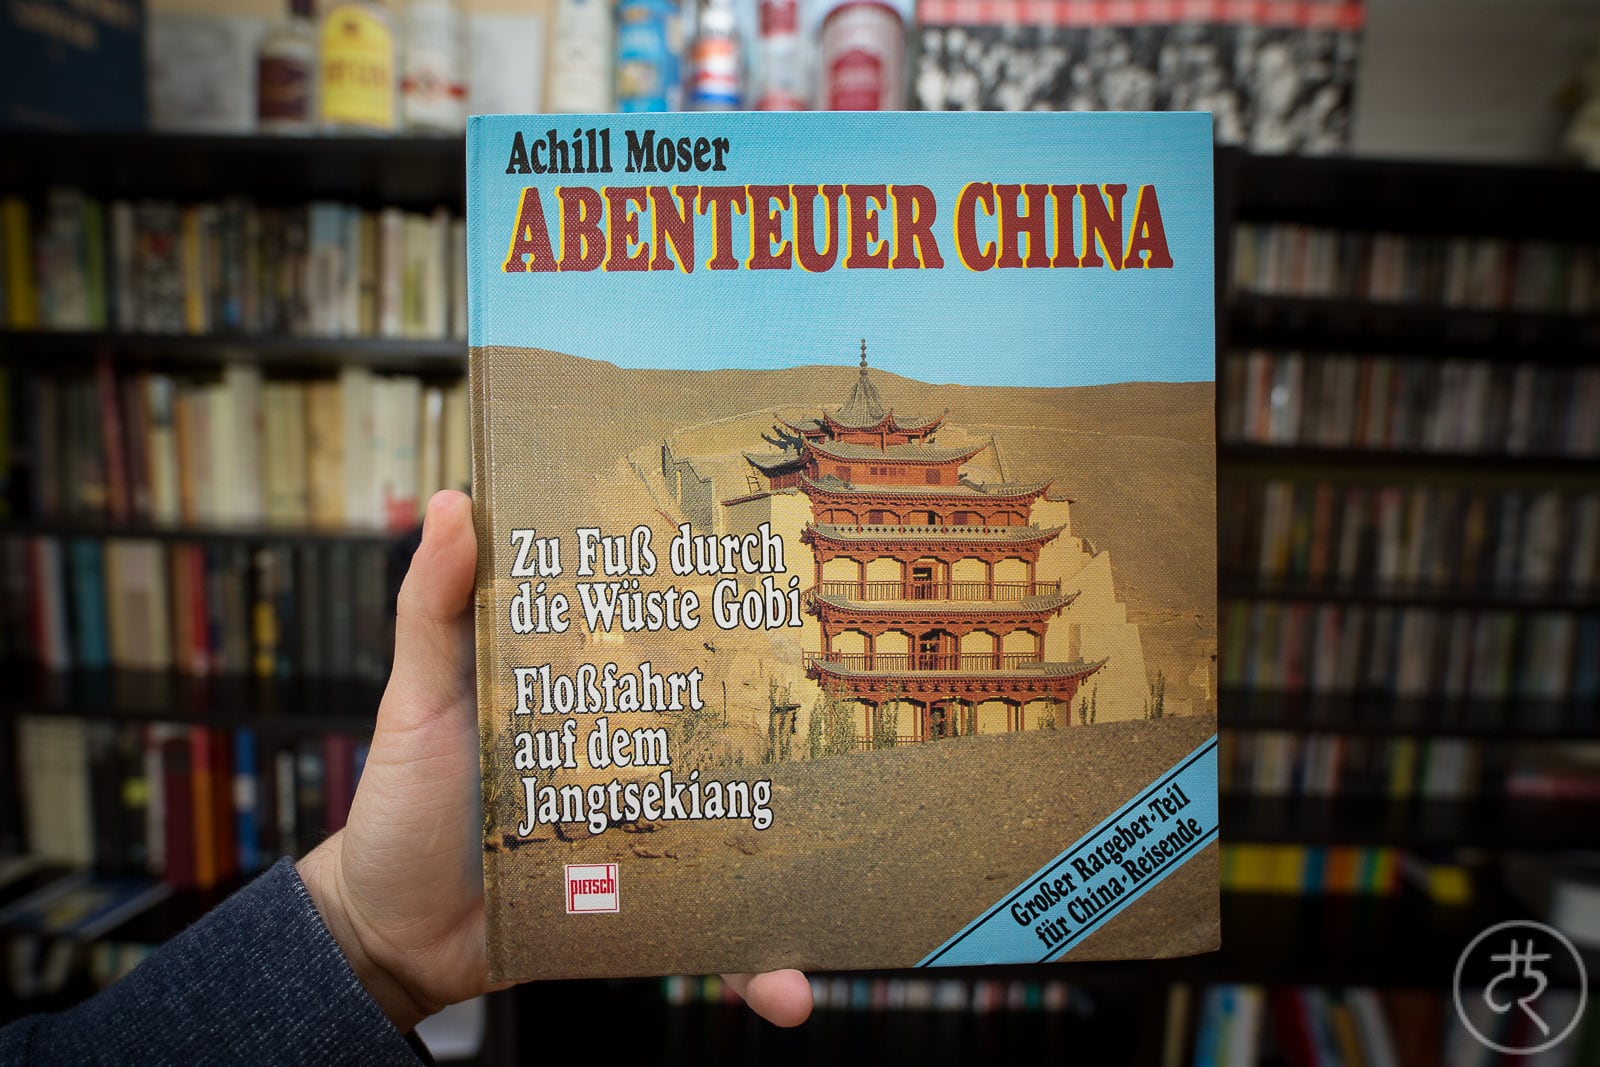 Achill Moser's "The China Adventure"